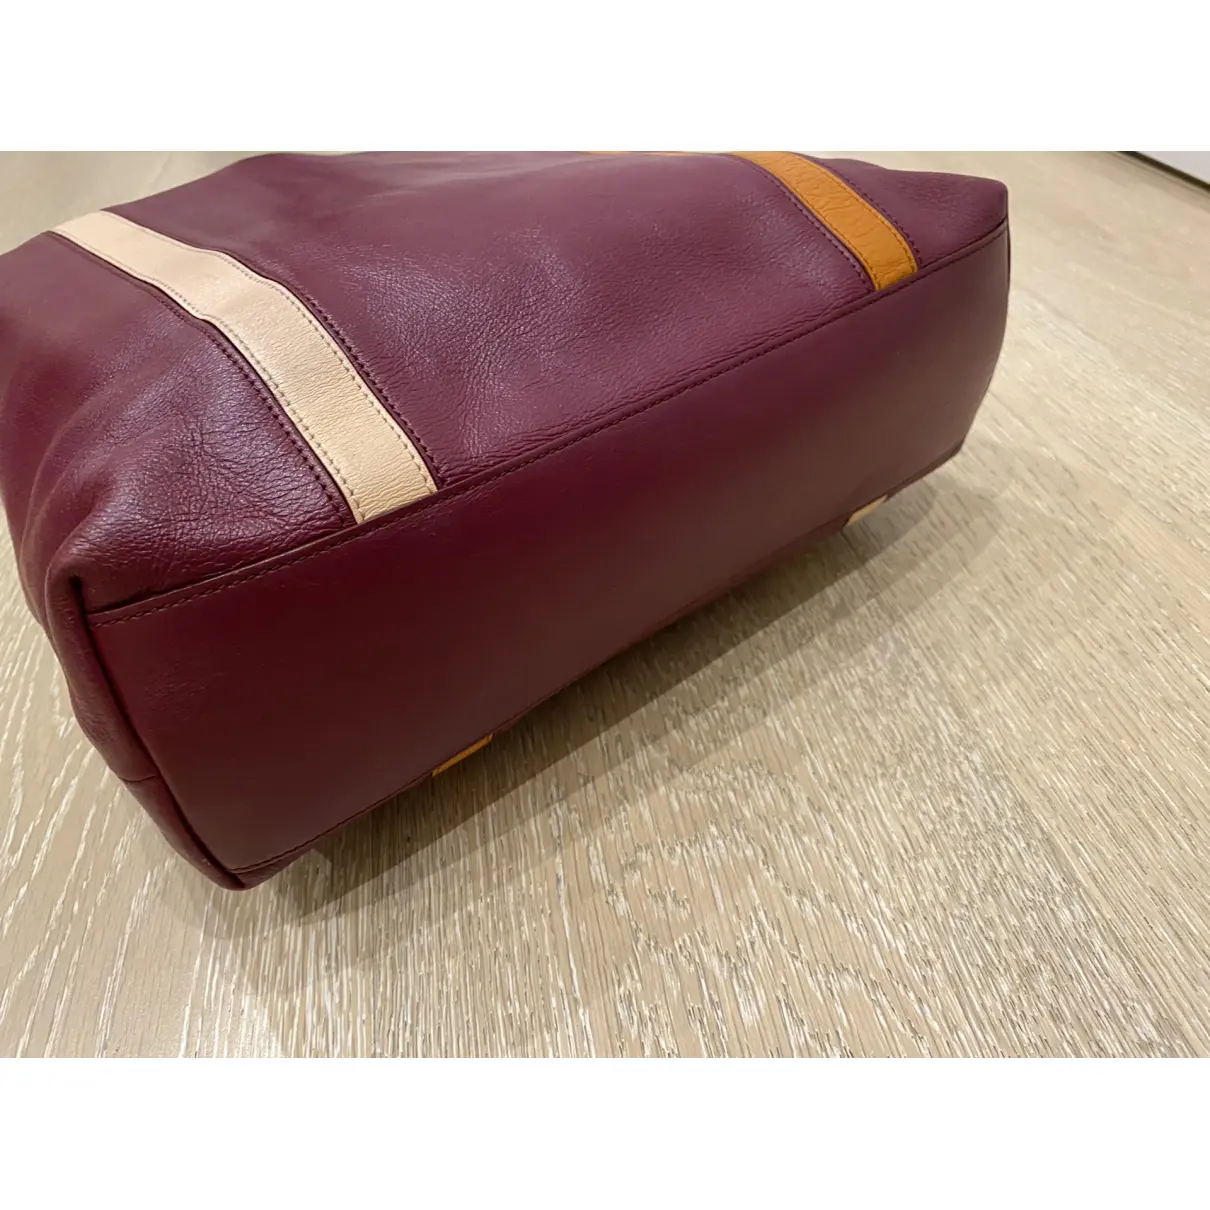 Buy Tod's Shopping Media leather handbag online